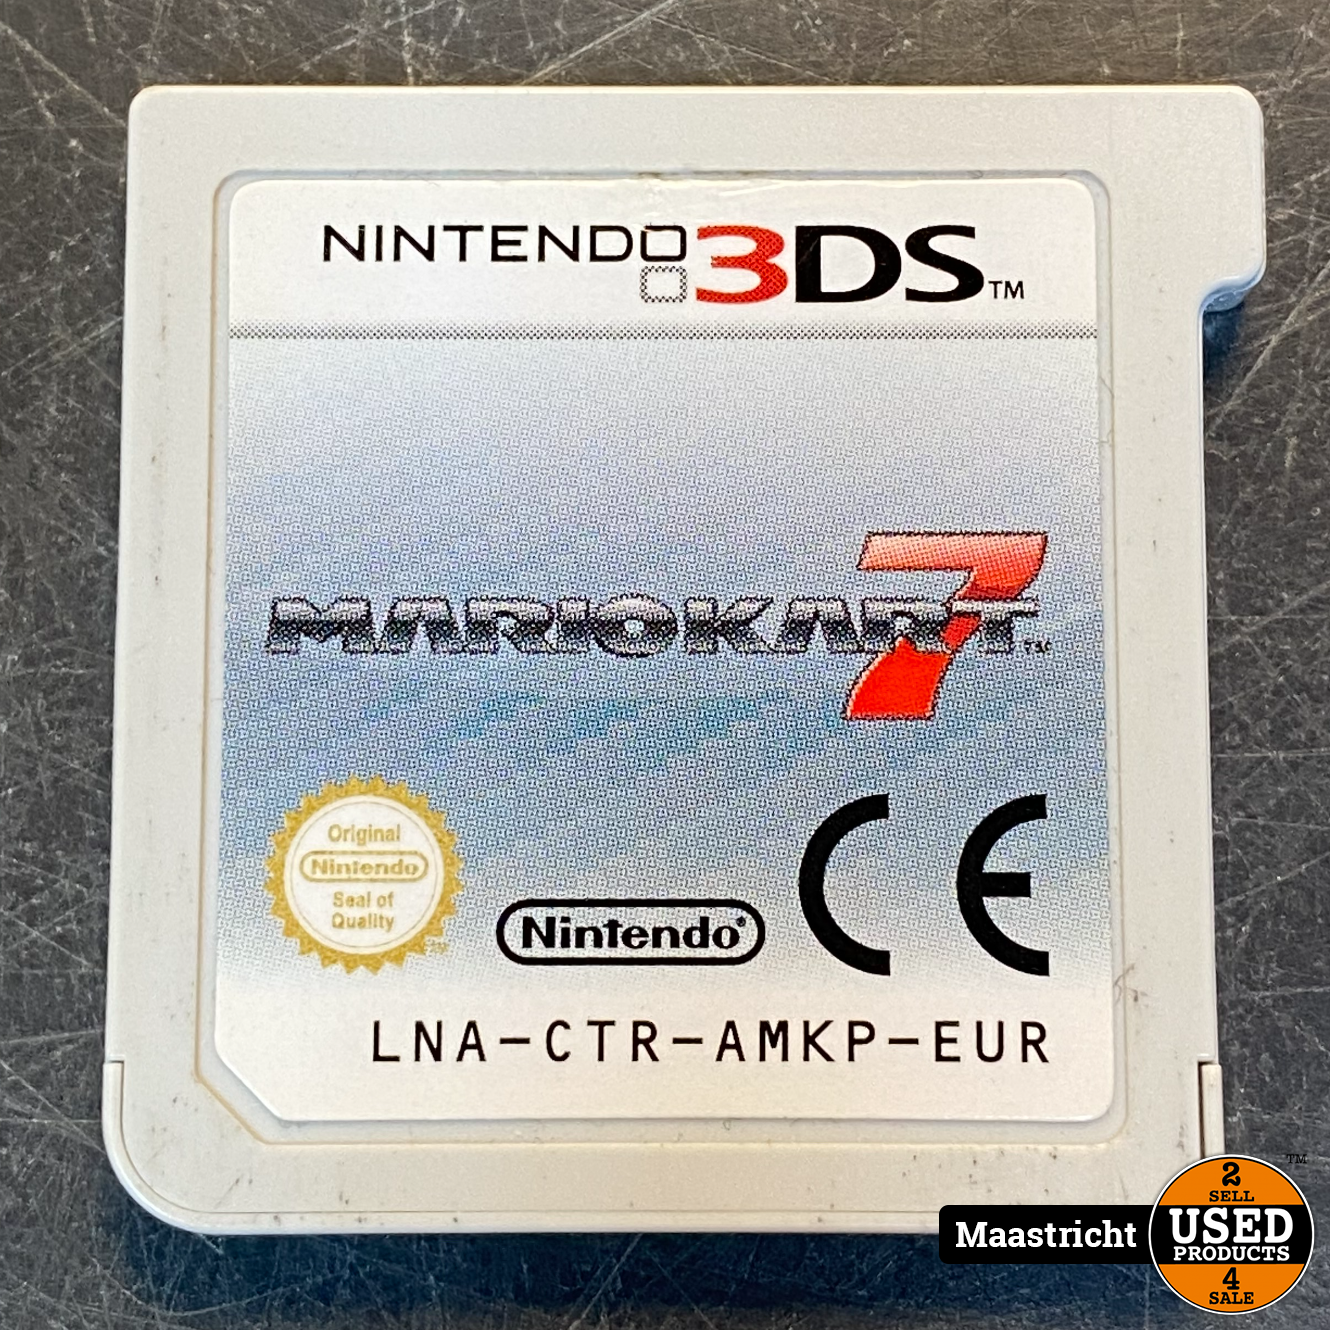 veer Afleiden lekkage Nintendo 3DS Game - Mario Kart 7 (losse cassette) - Used Products Maastricht